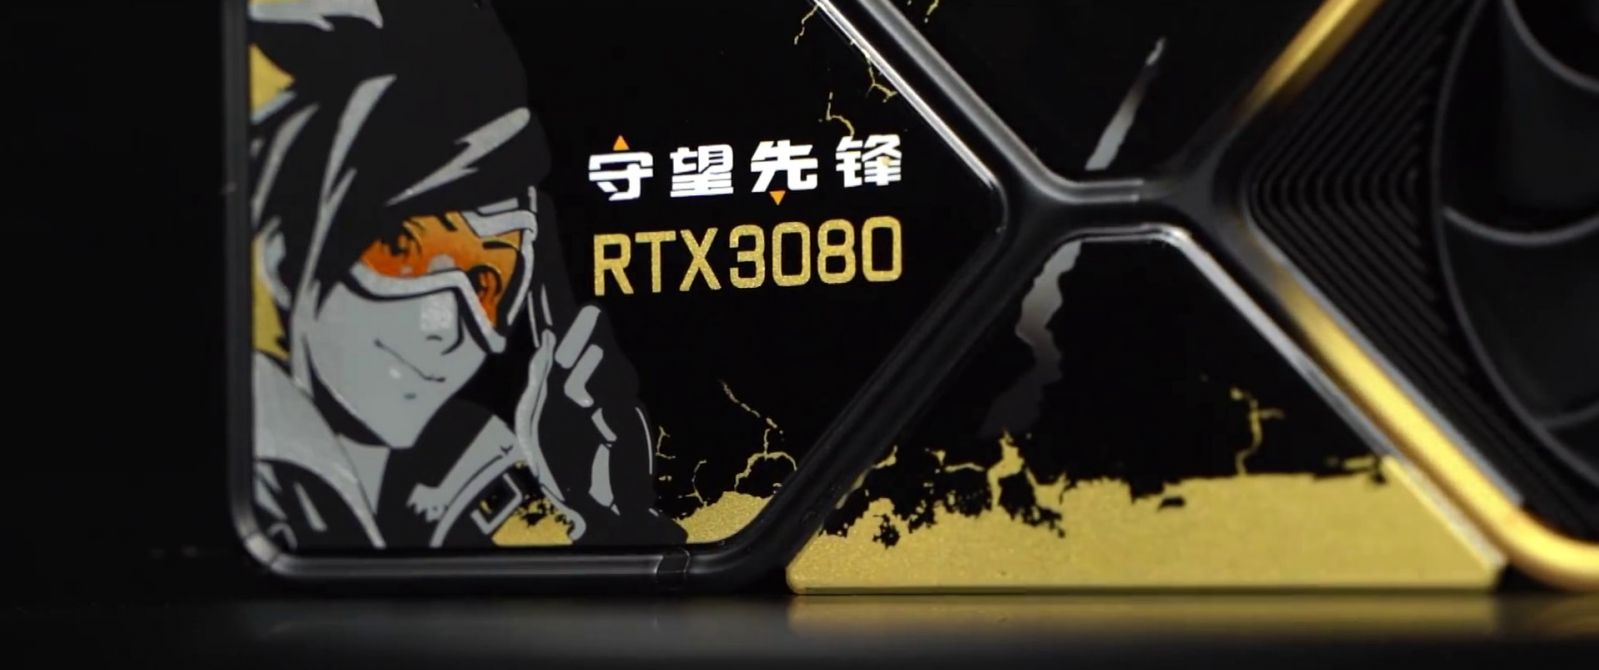 NVIDIA-RTX3080-Overwatch-6.jpg